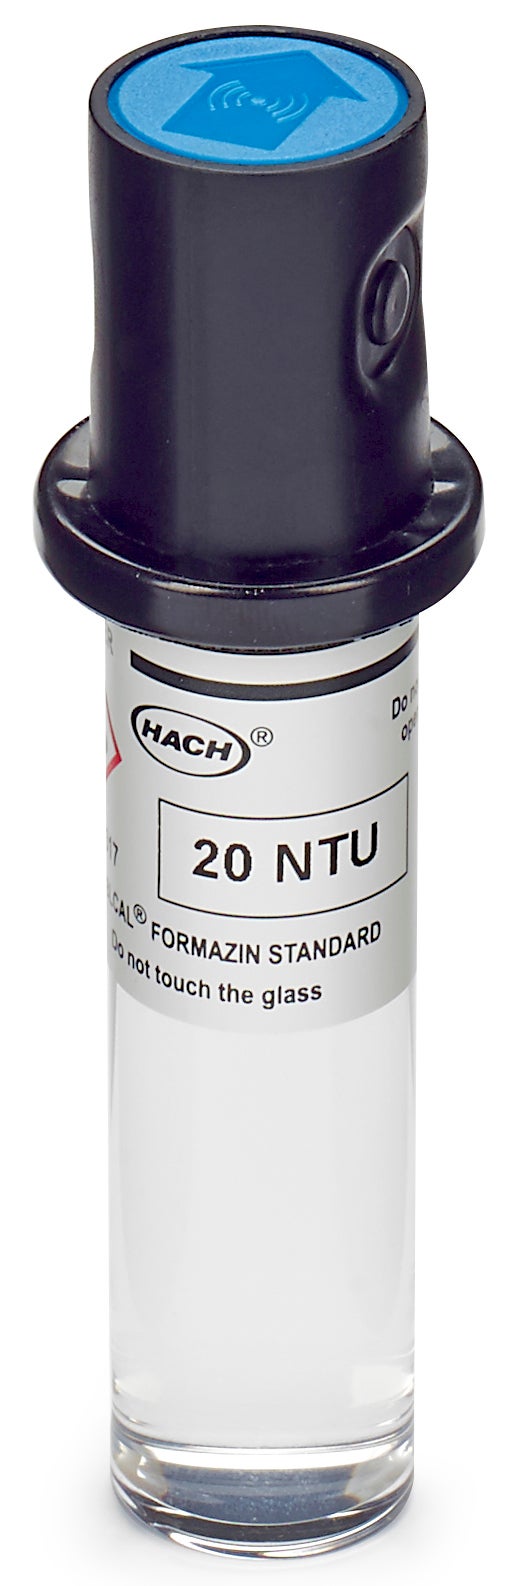 Stablcal Calibration Vial, 20 NTU, without RFID for TU5200, TU5300sc, and TU5400sc Laser Turbidimeters